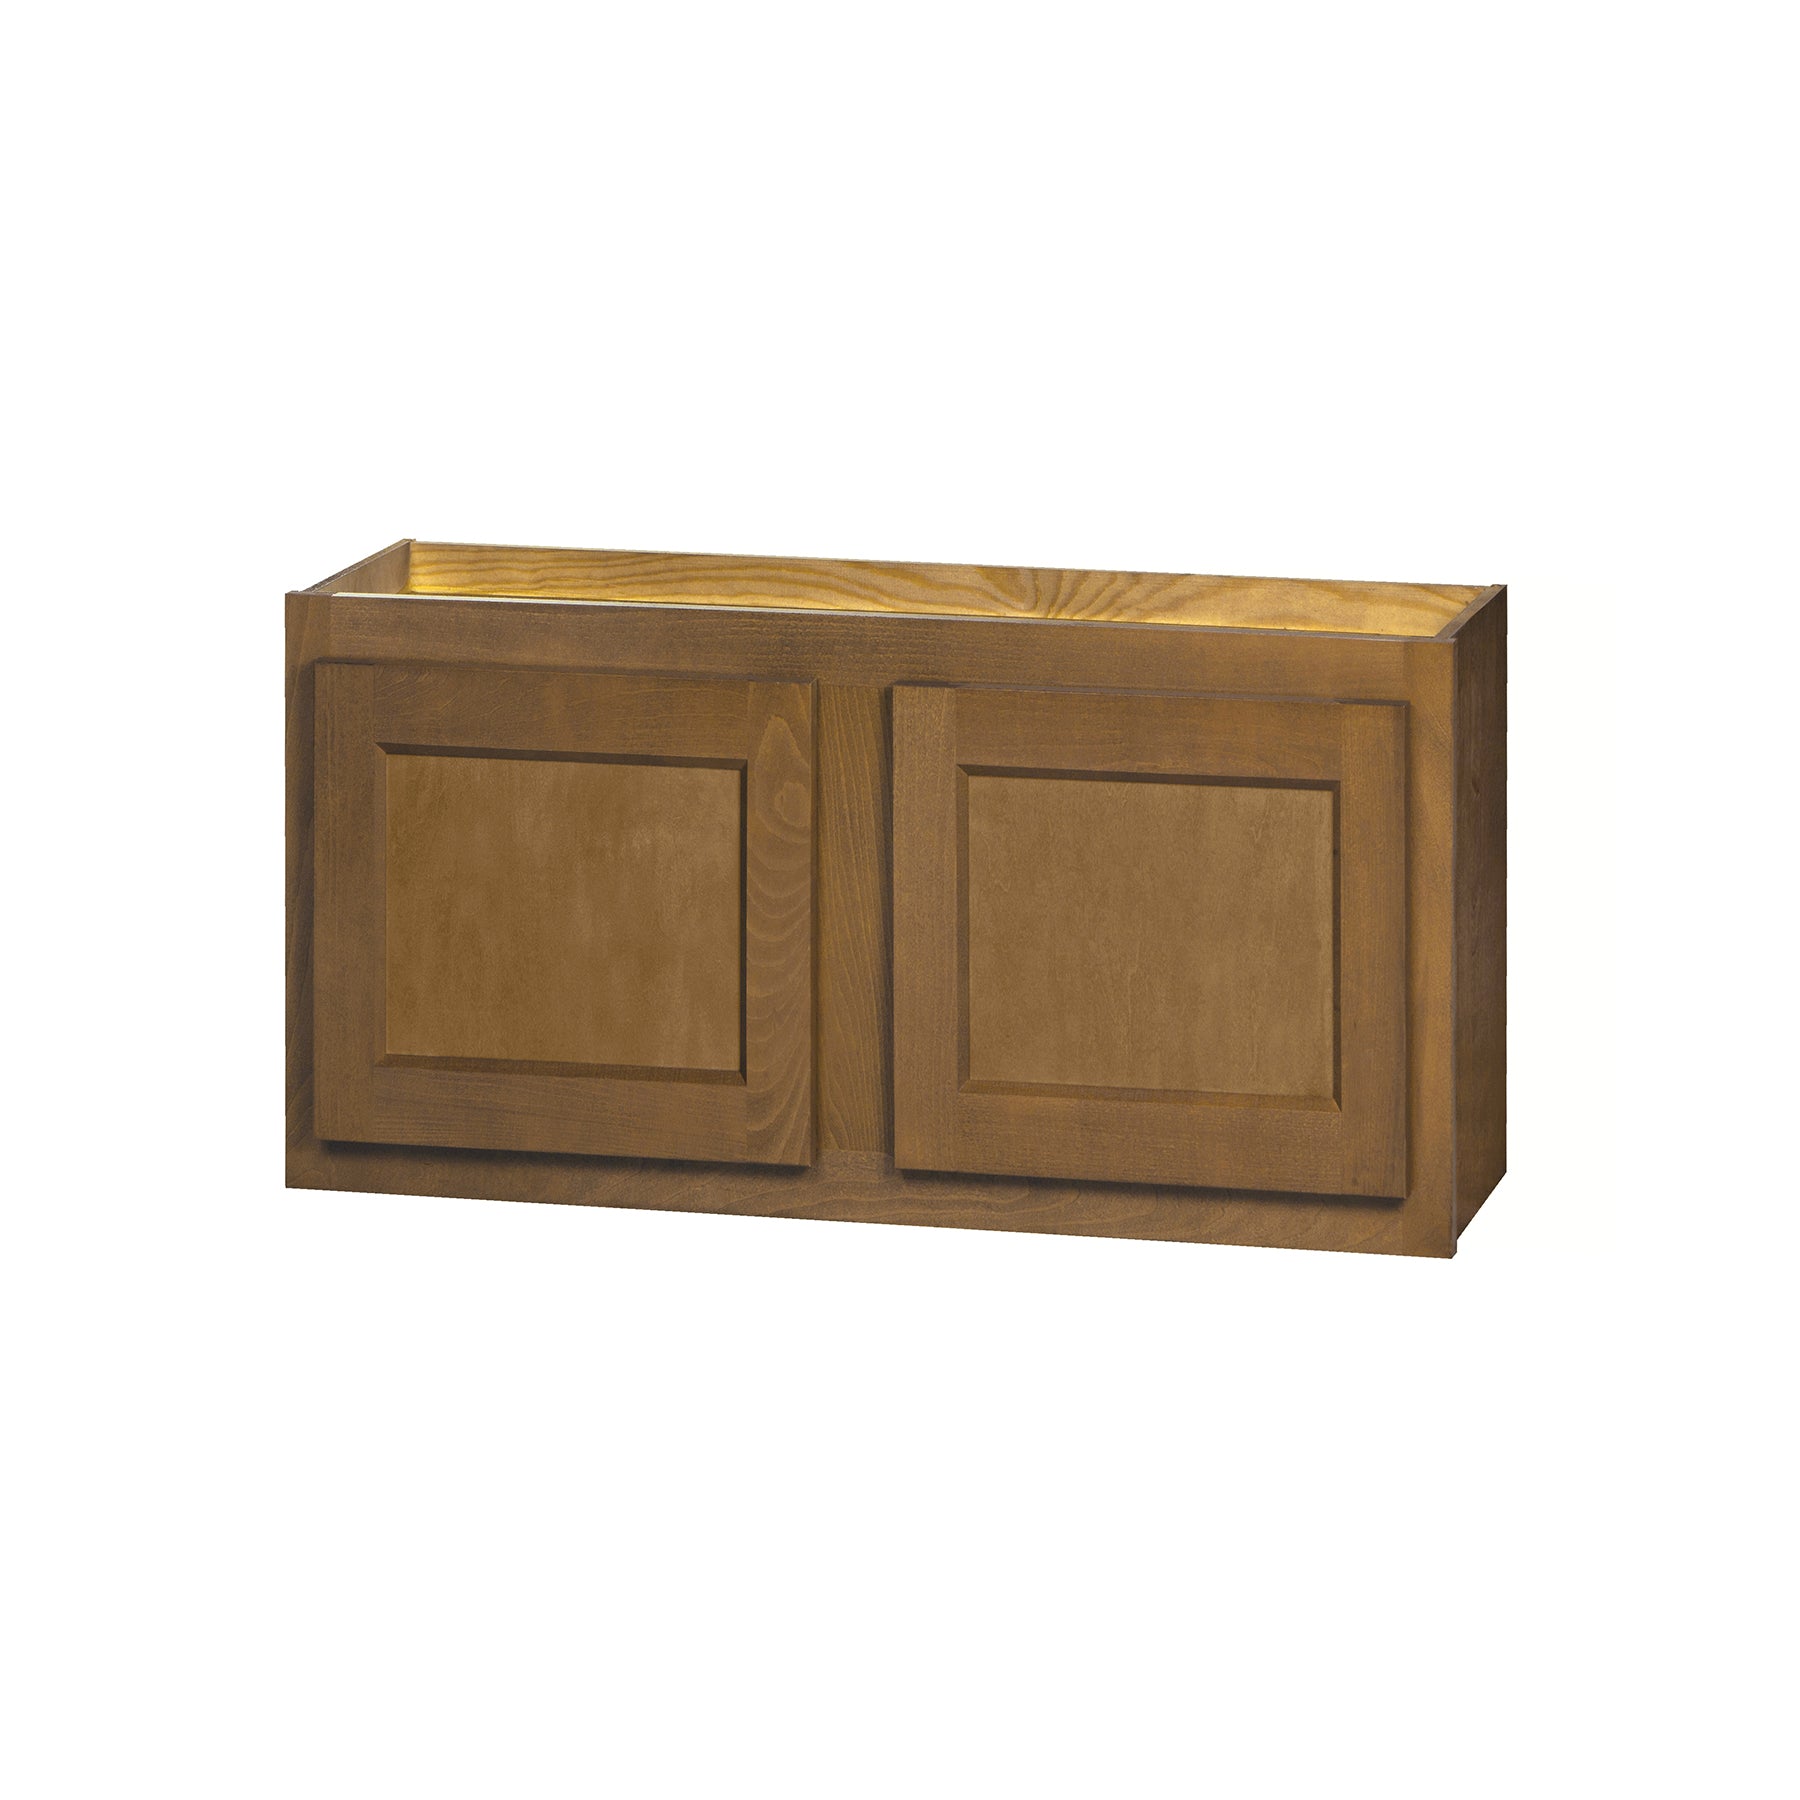 15 inch Wall Cabinets - Warmwood Shaker - 30 Inch W x 15 Inch H x 12 Inch D